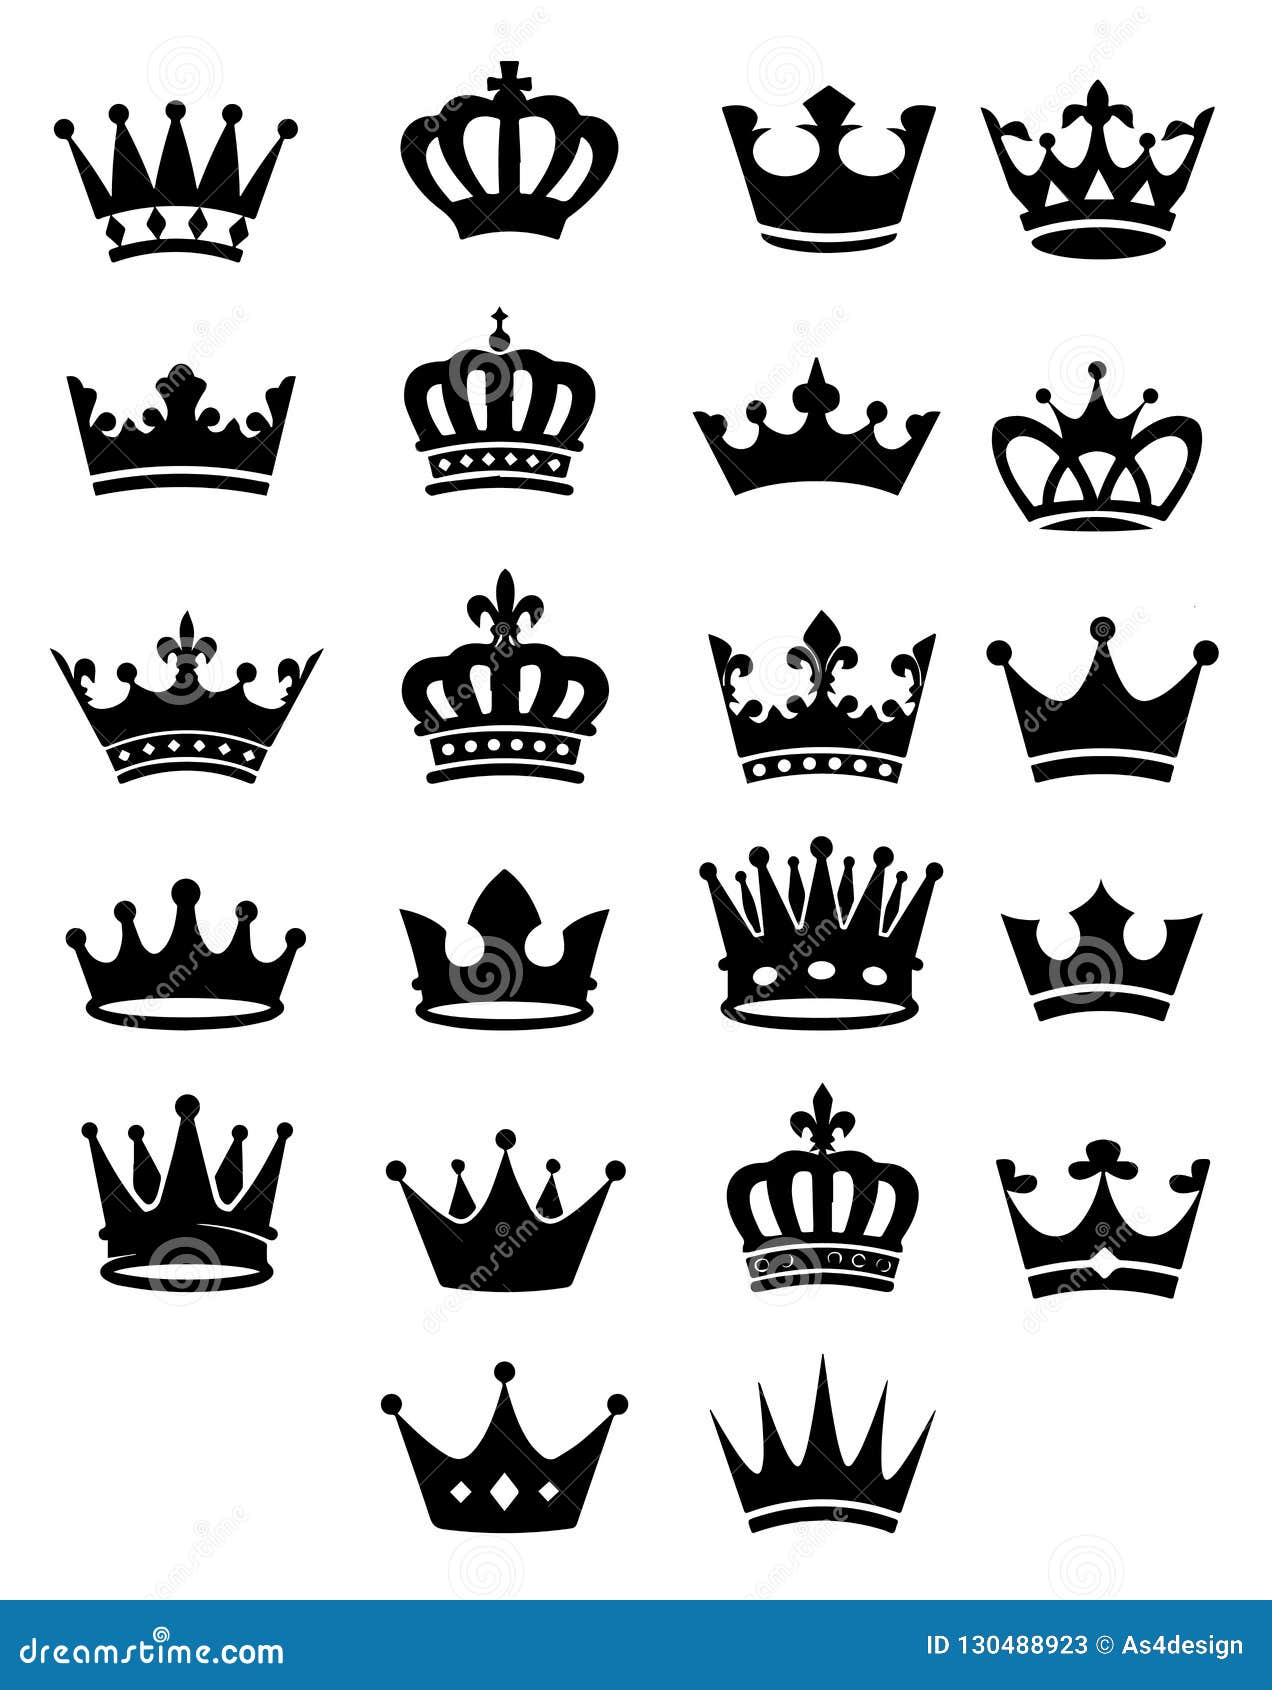 22 unique royal black crowns in different s